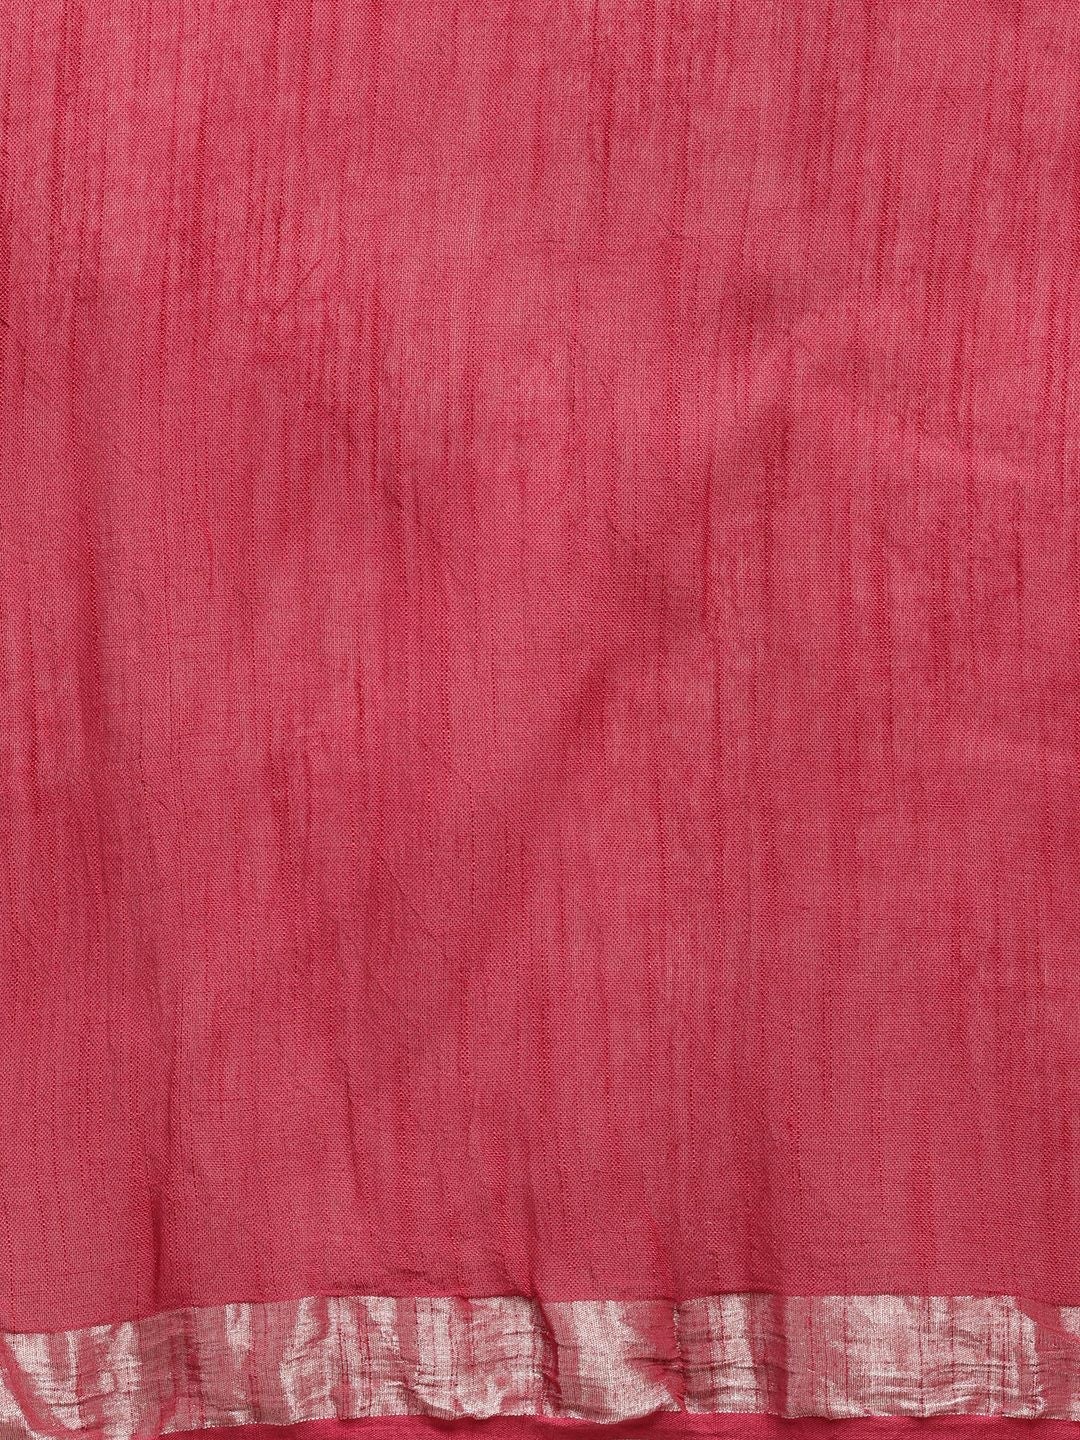 Women's Handloom Cotton Linen Slub Shibori Print Saree - Olive Mist